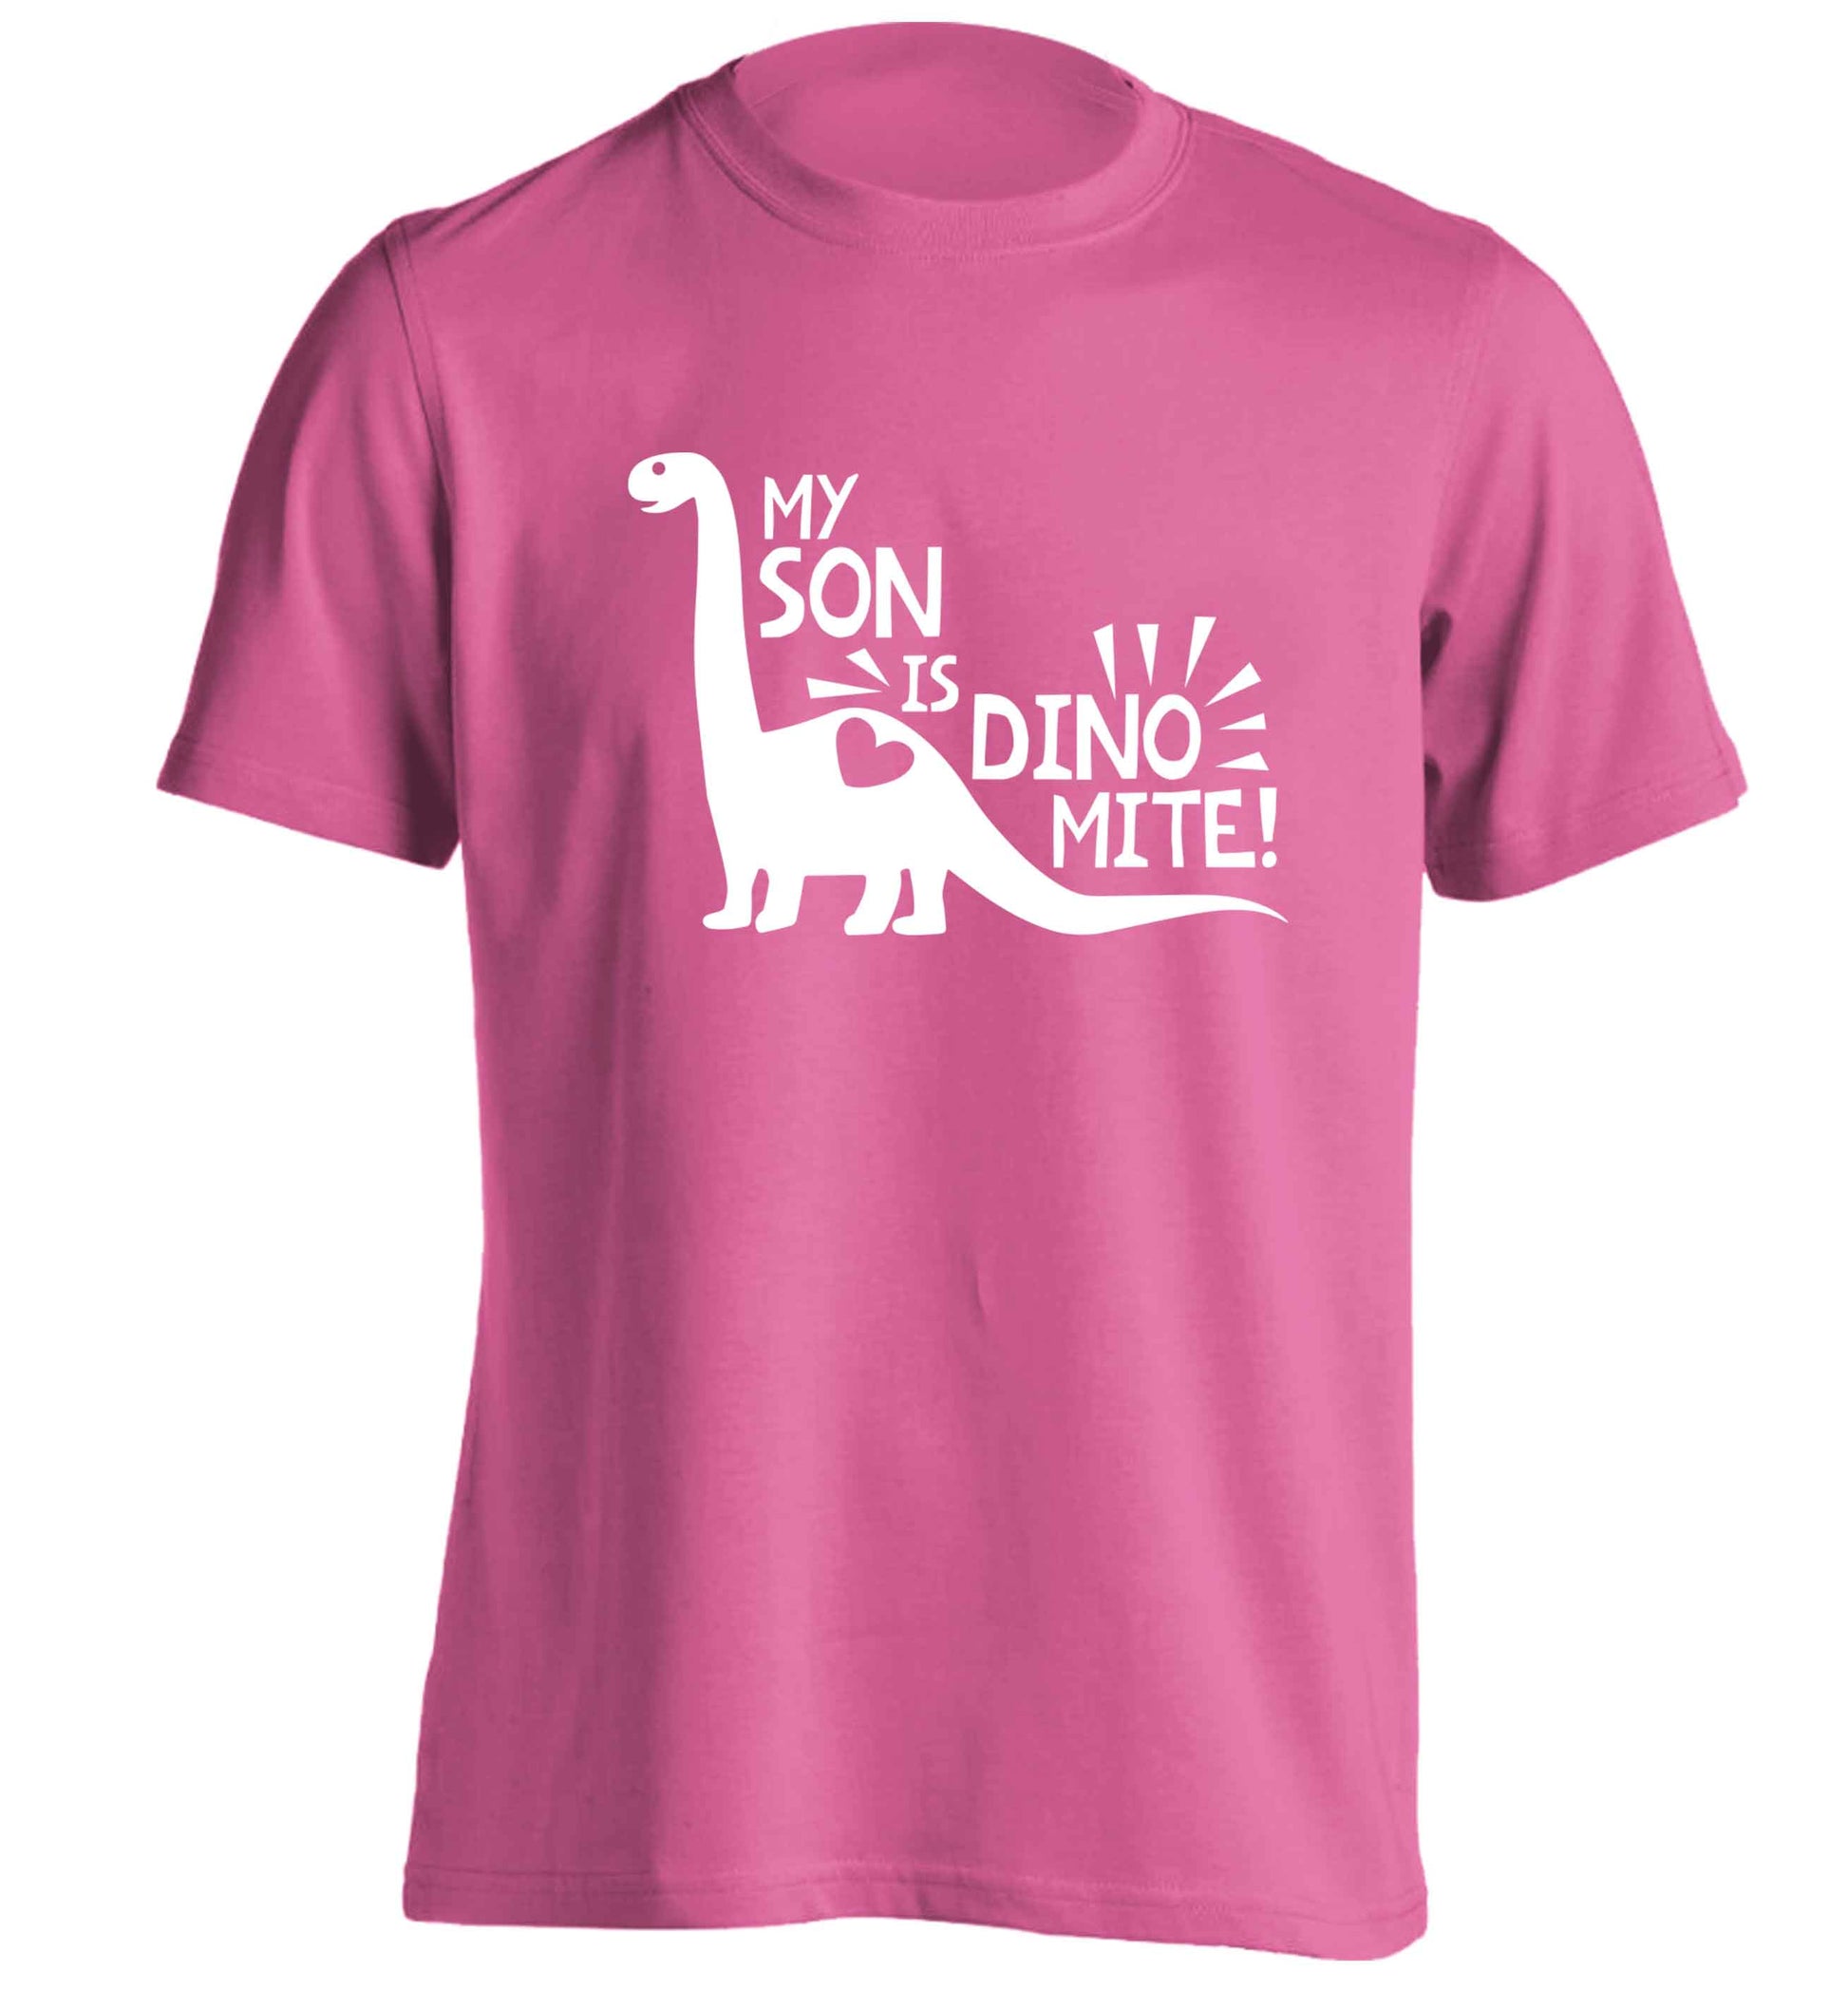 My son is dinomite! adults unisex pink Tshirt 2XL